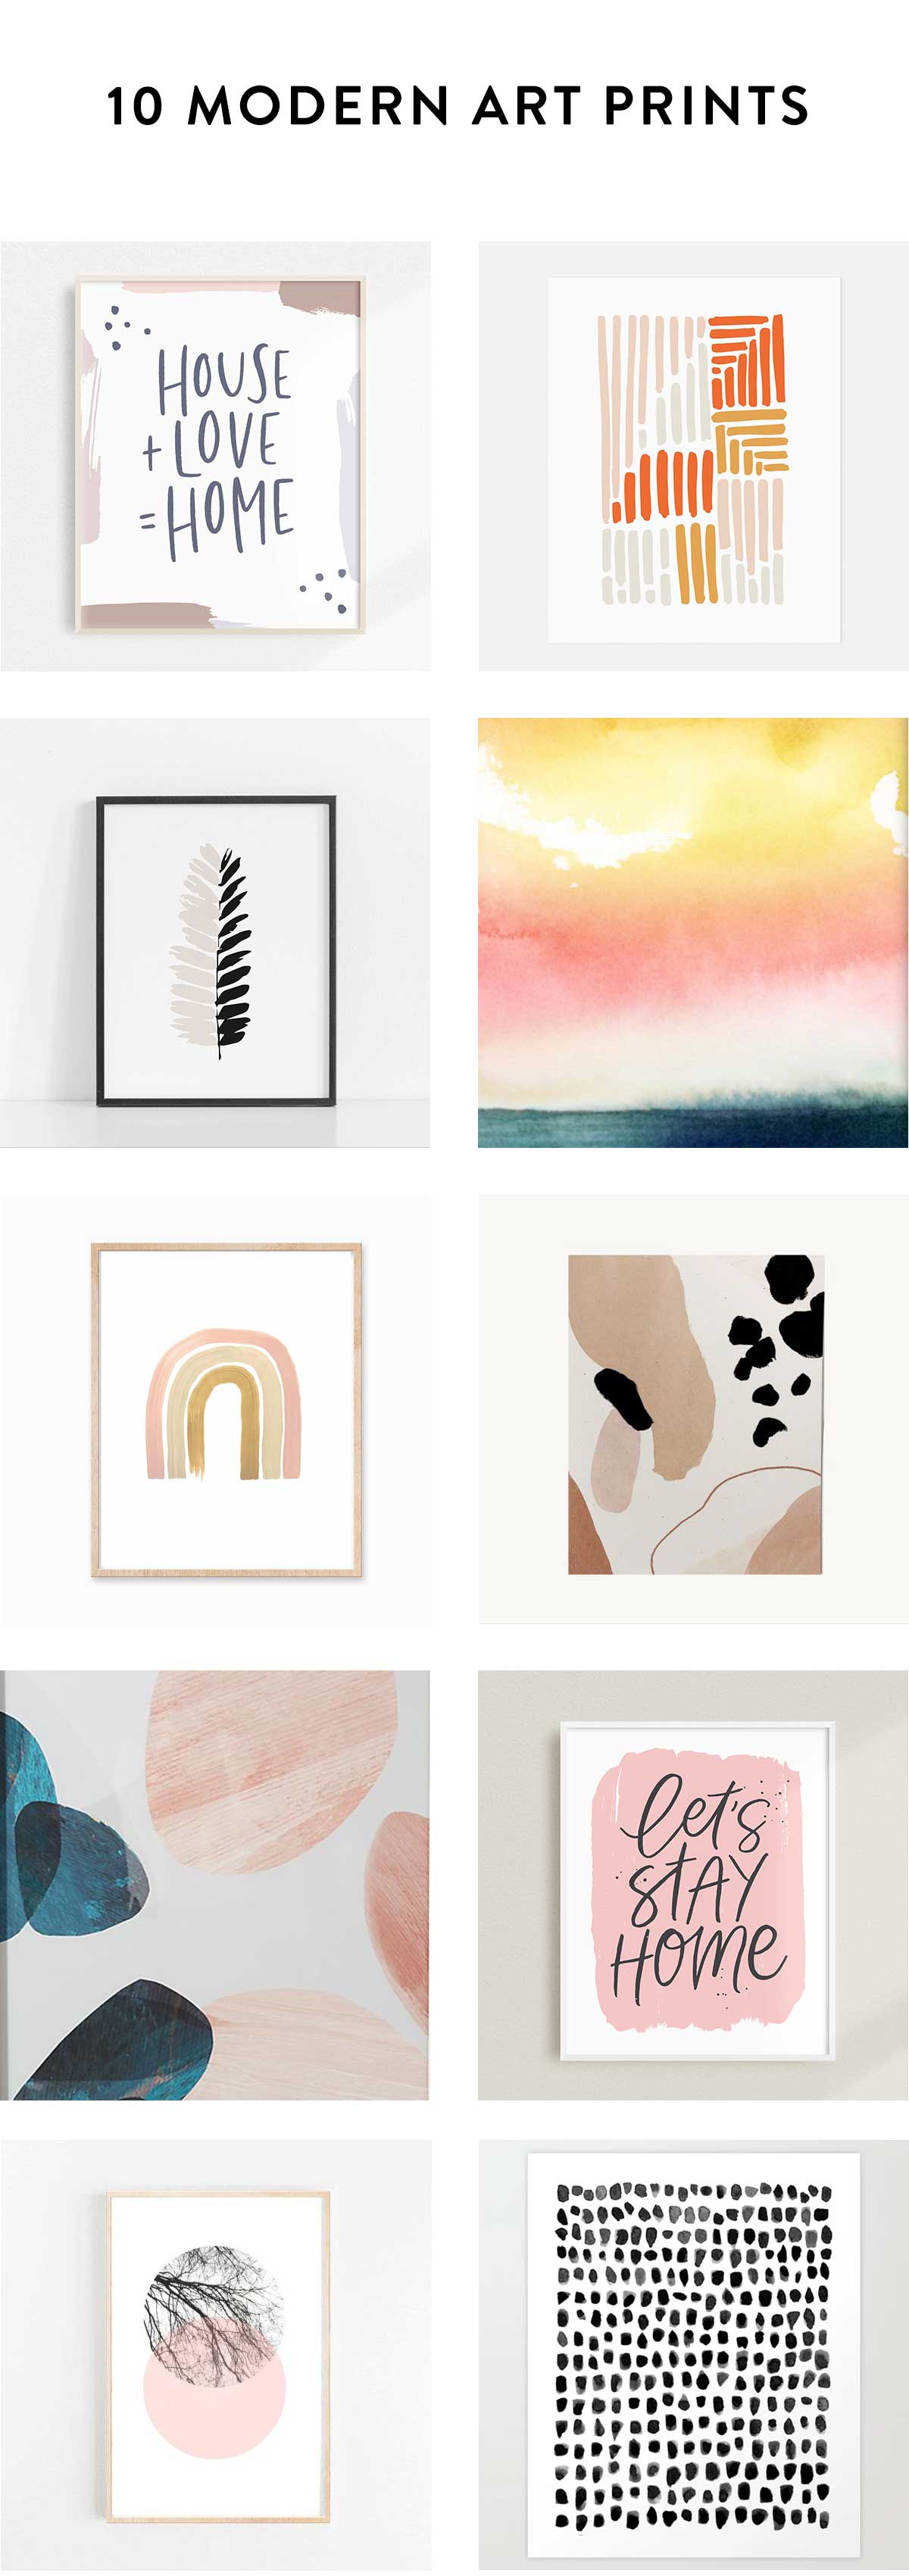 10 modern art prints for your living room walls